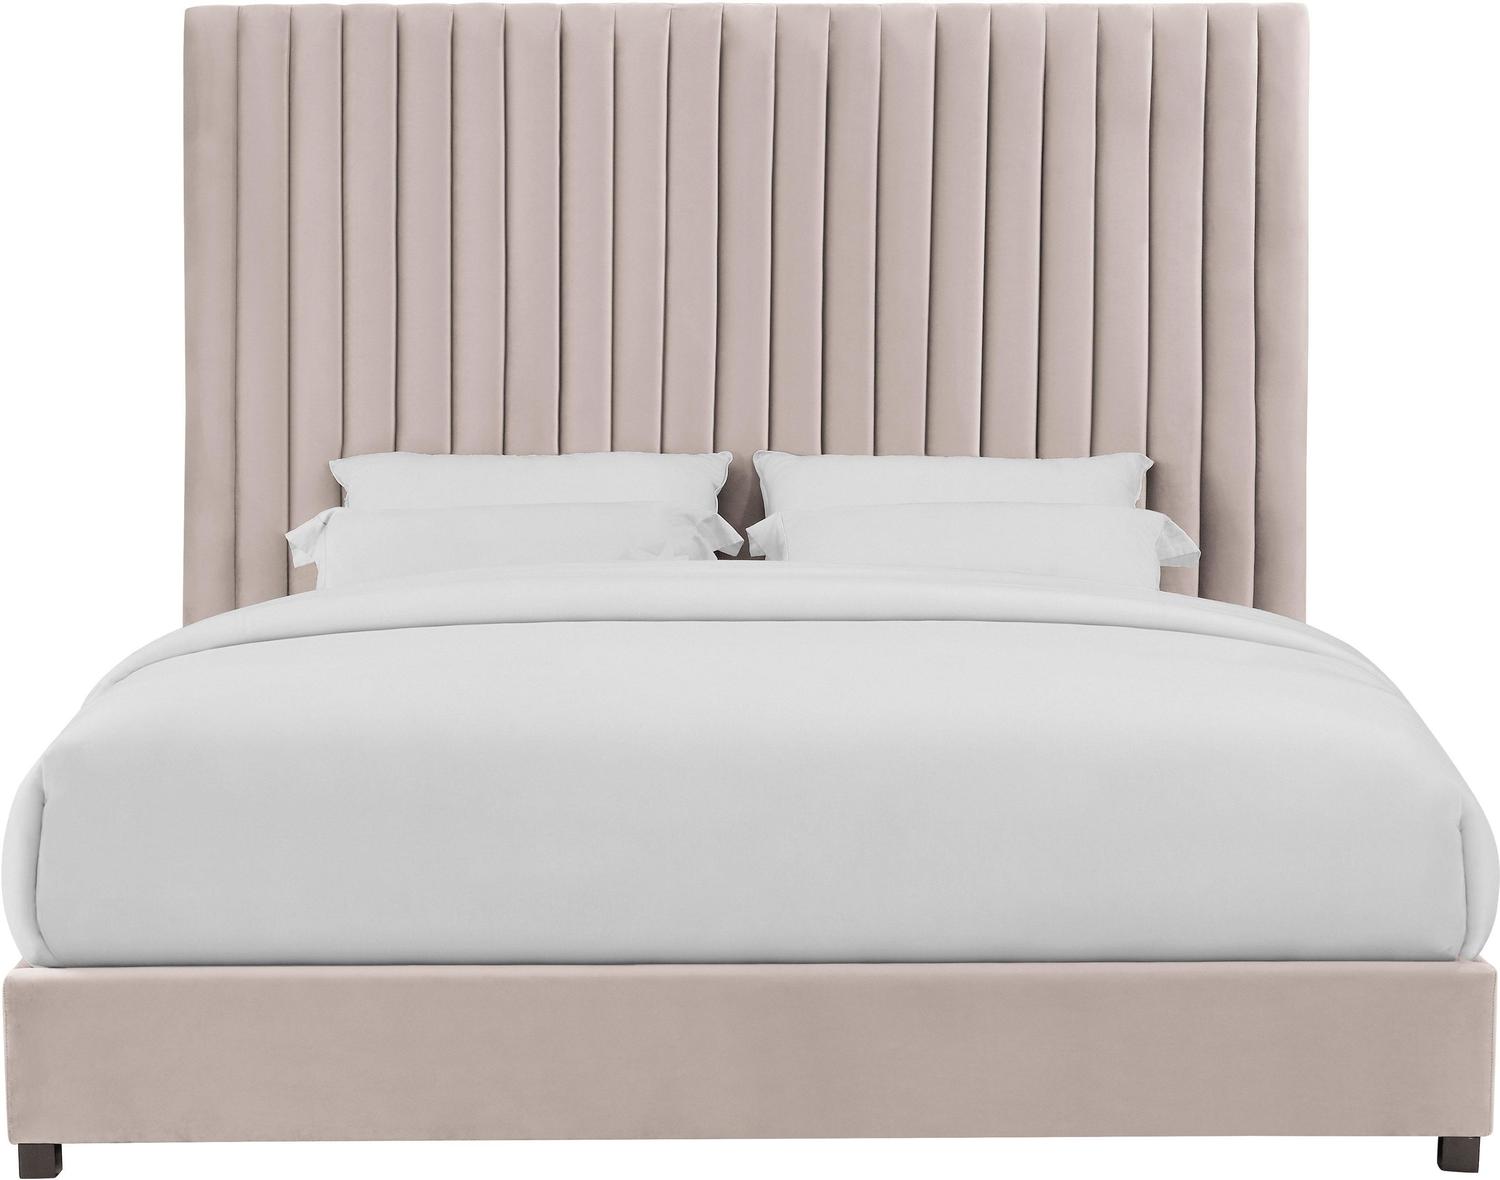 queen platform bed frame with storage Tov Furniture Beds Blush